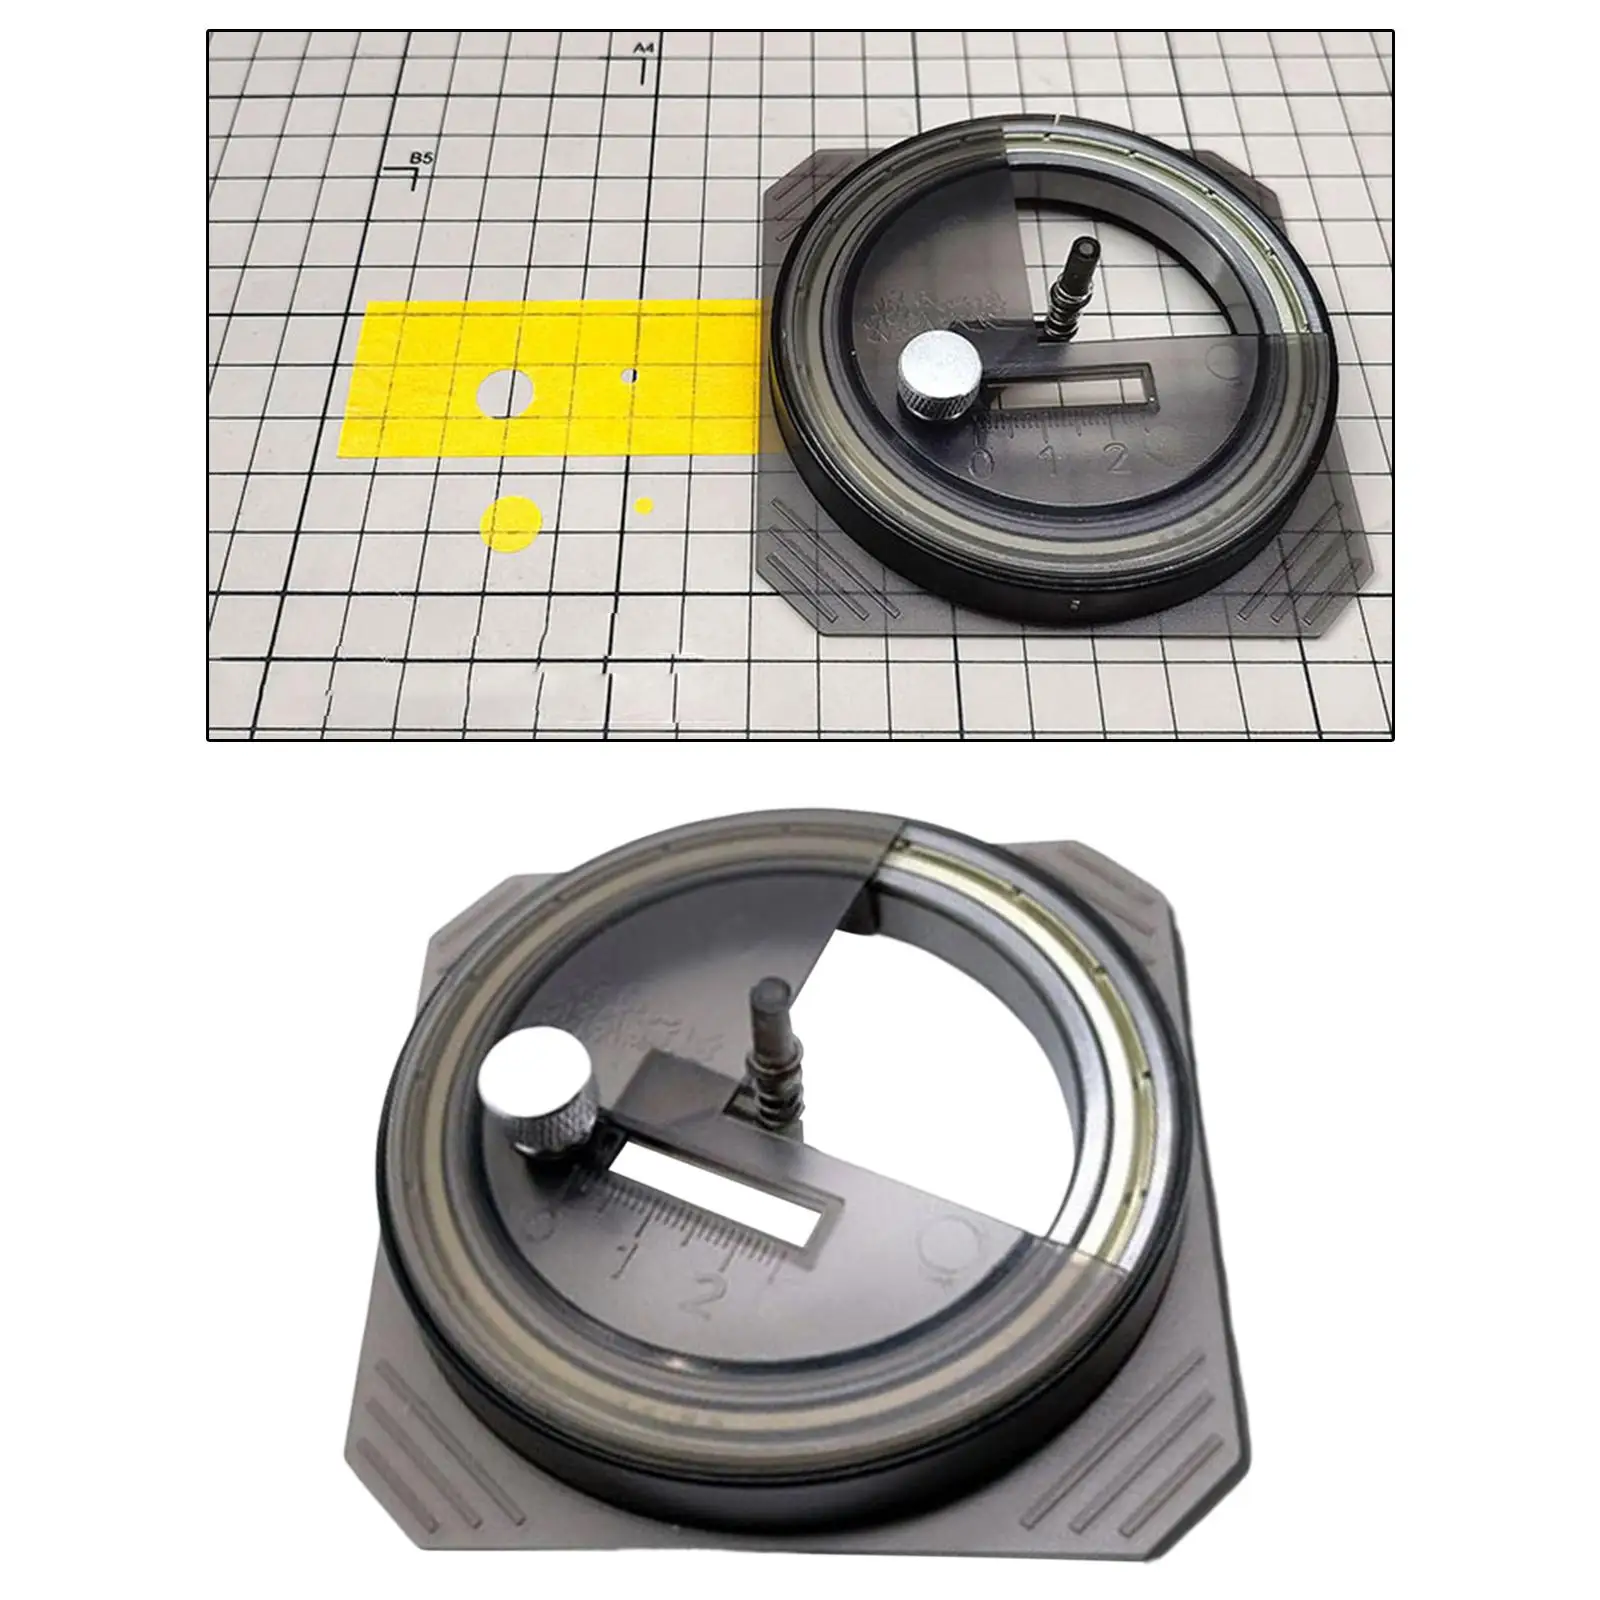  Adjustment Circular Cutter for 1mm Round Sticker Model Making DIY Tool